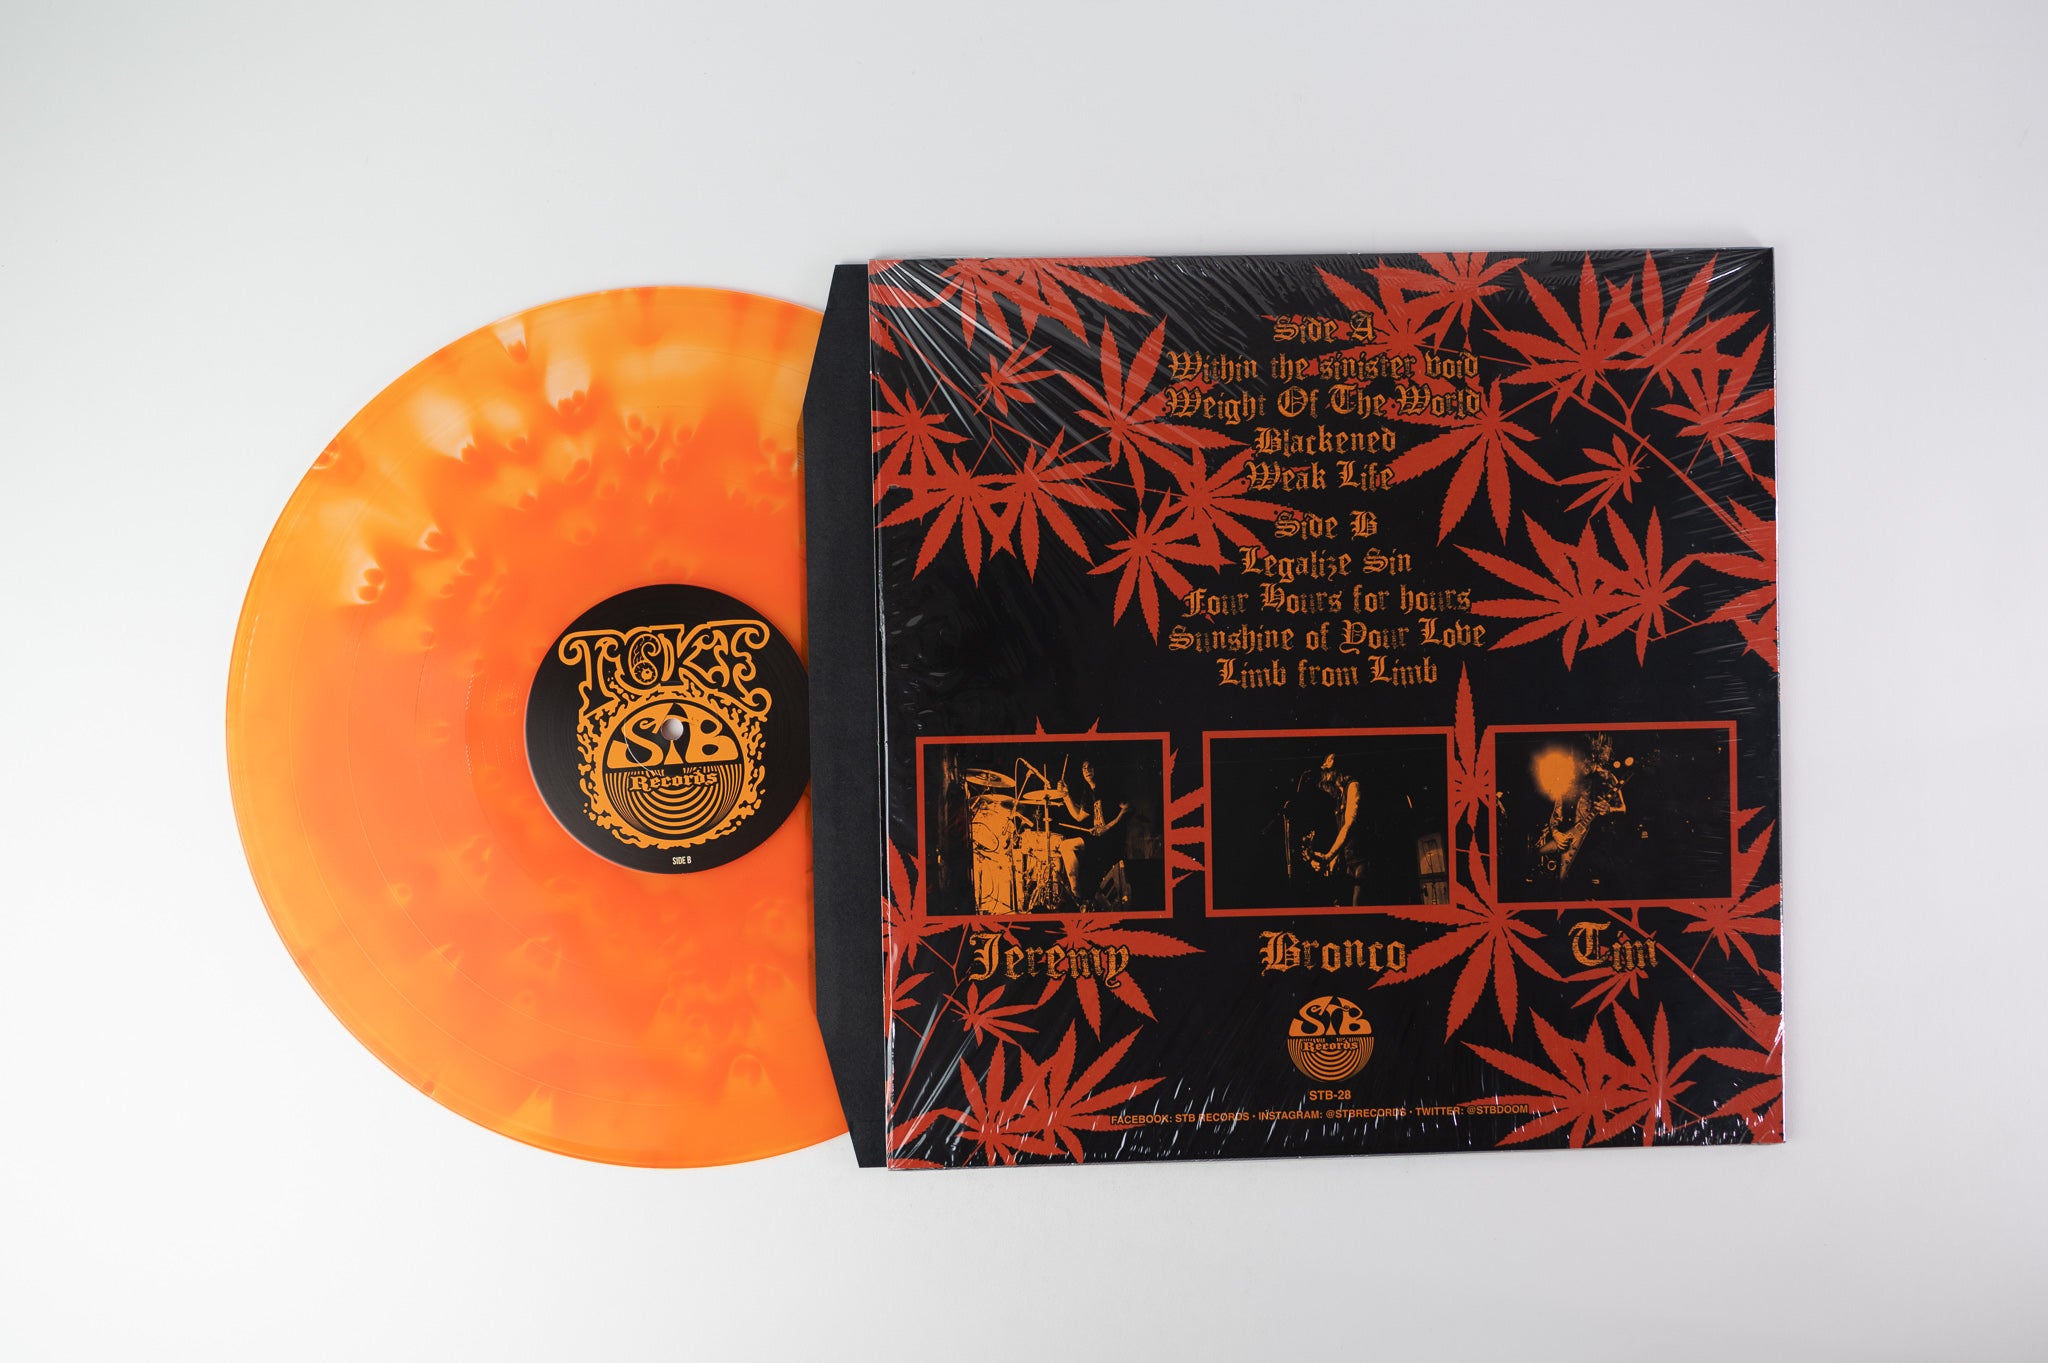 Toke - (Orange) on STB Limited Edition 2017 Reissue Orange Dream Vinyl with Bonus Tracks